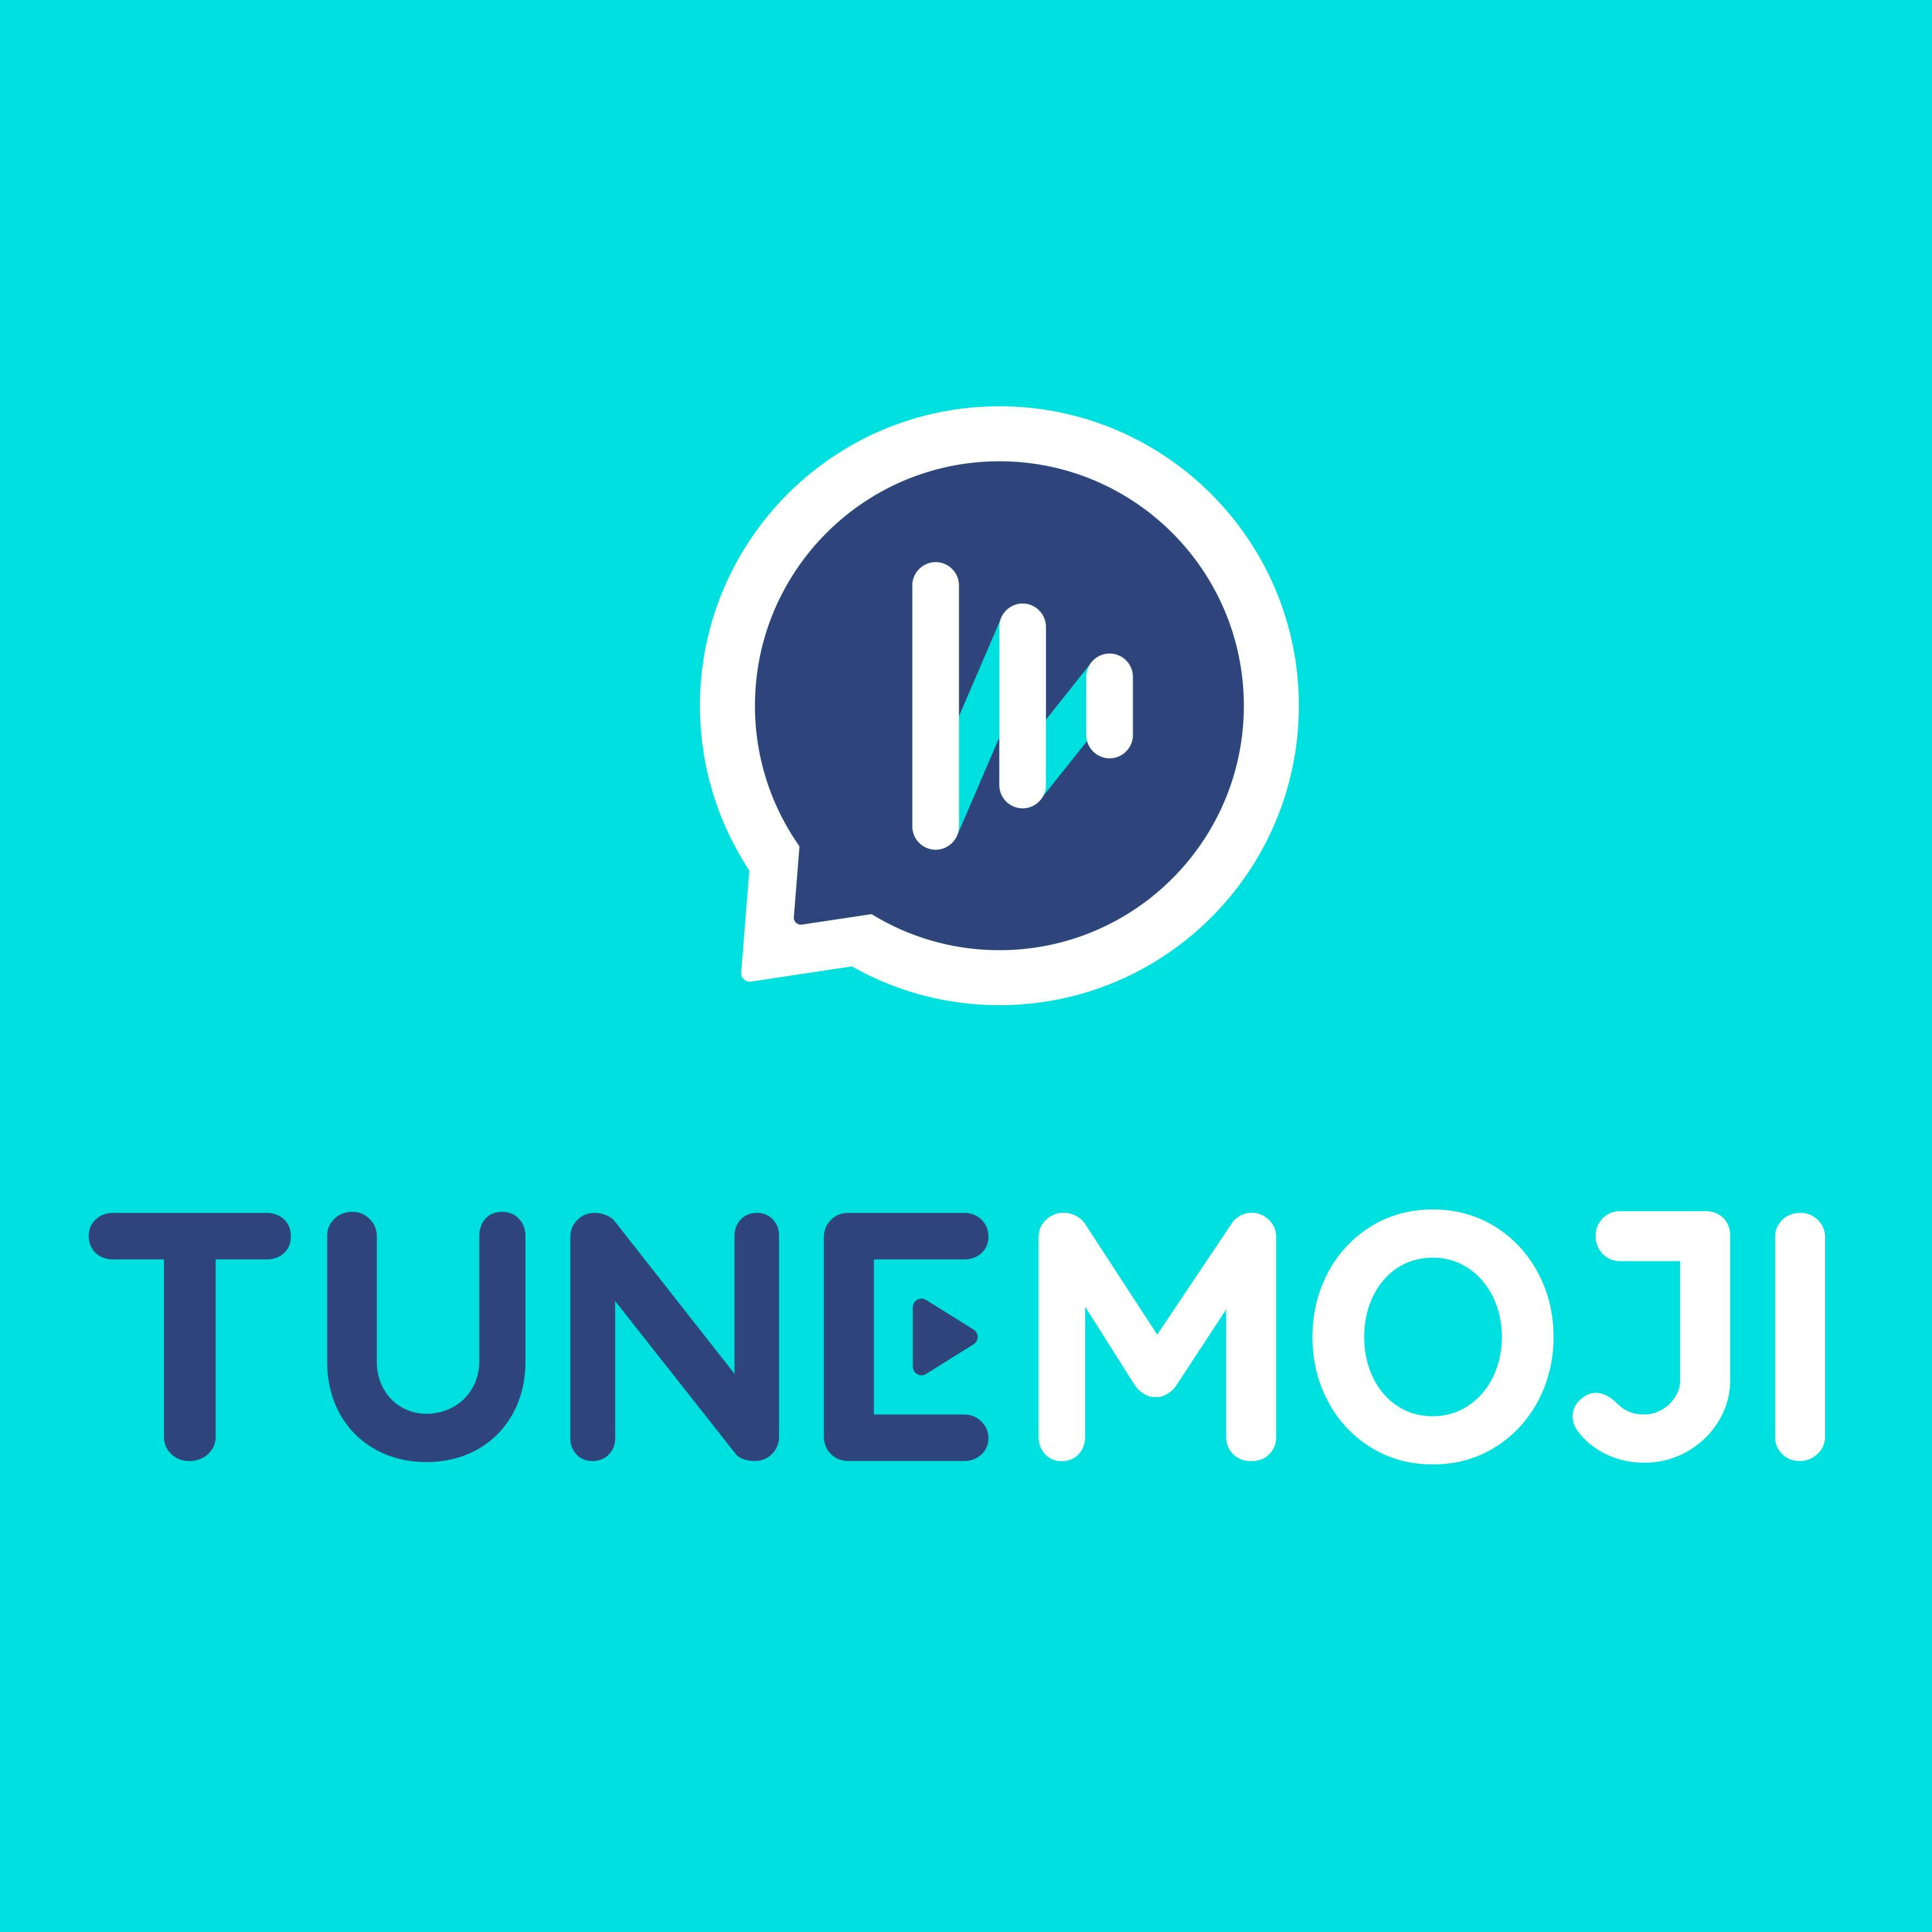 TuneMoji logo blue